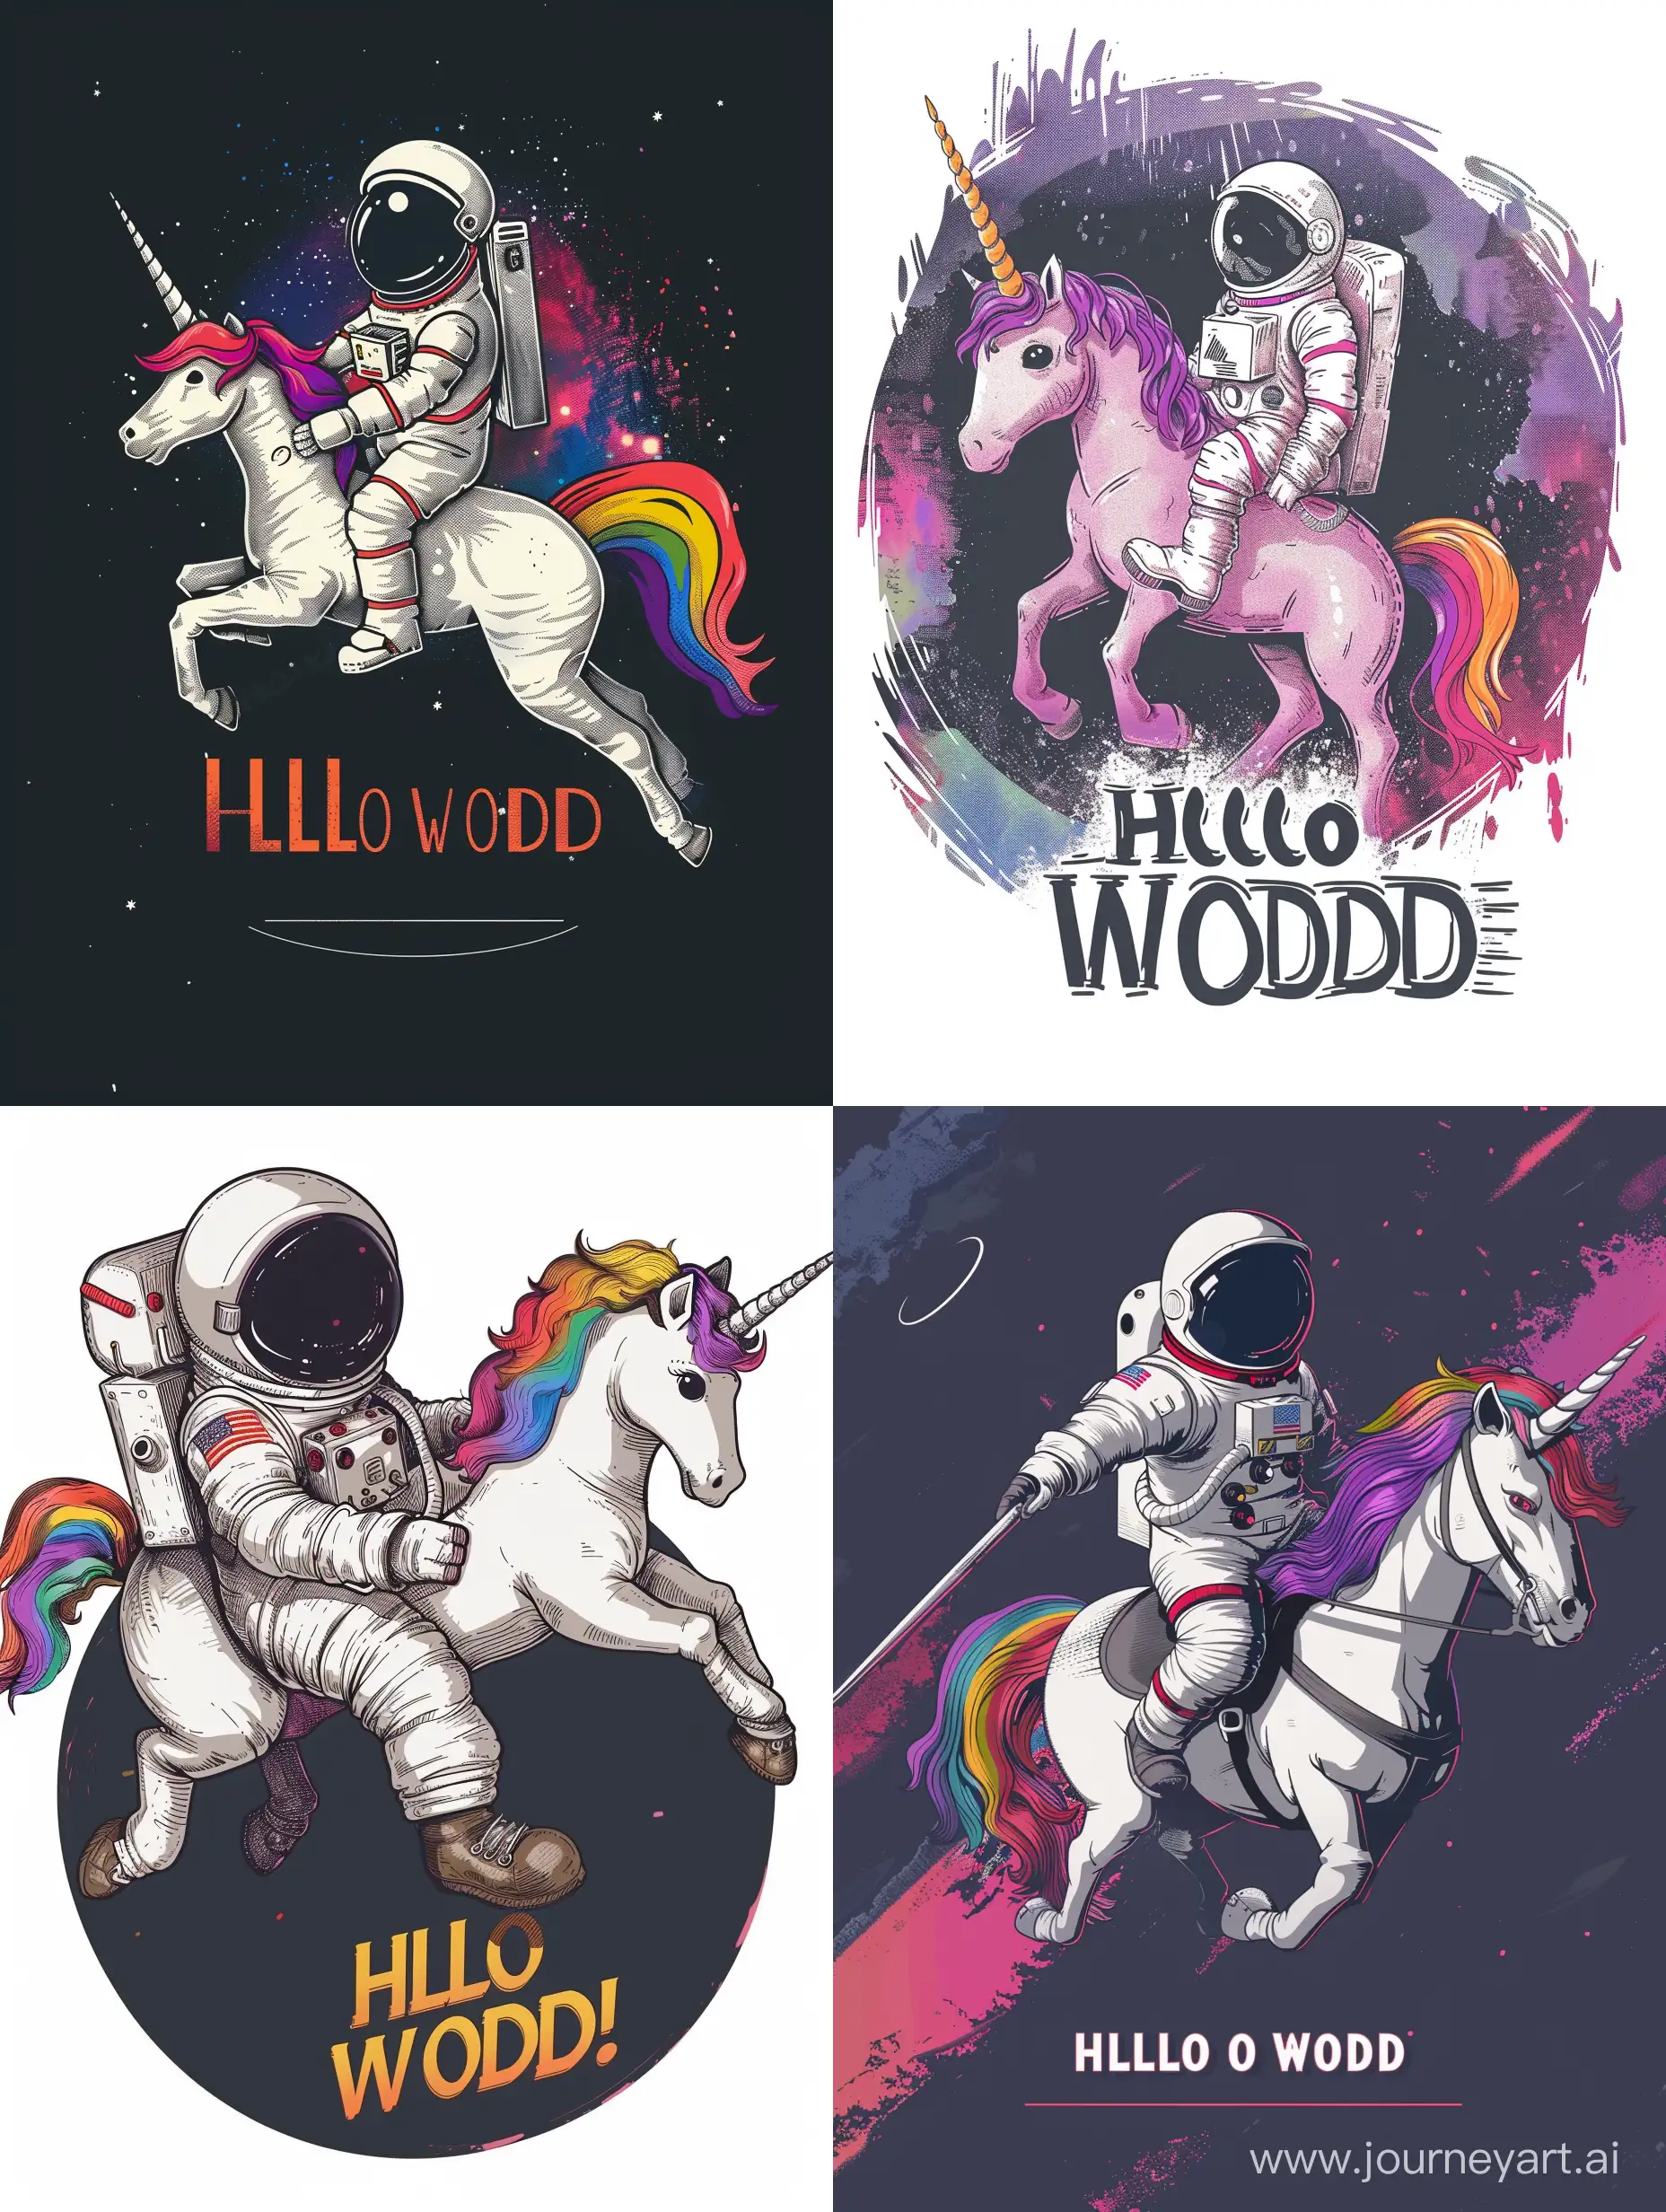 An astronaut riding a rainbow unicorn, cinematic, dramatic, with text:"hello world"